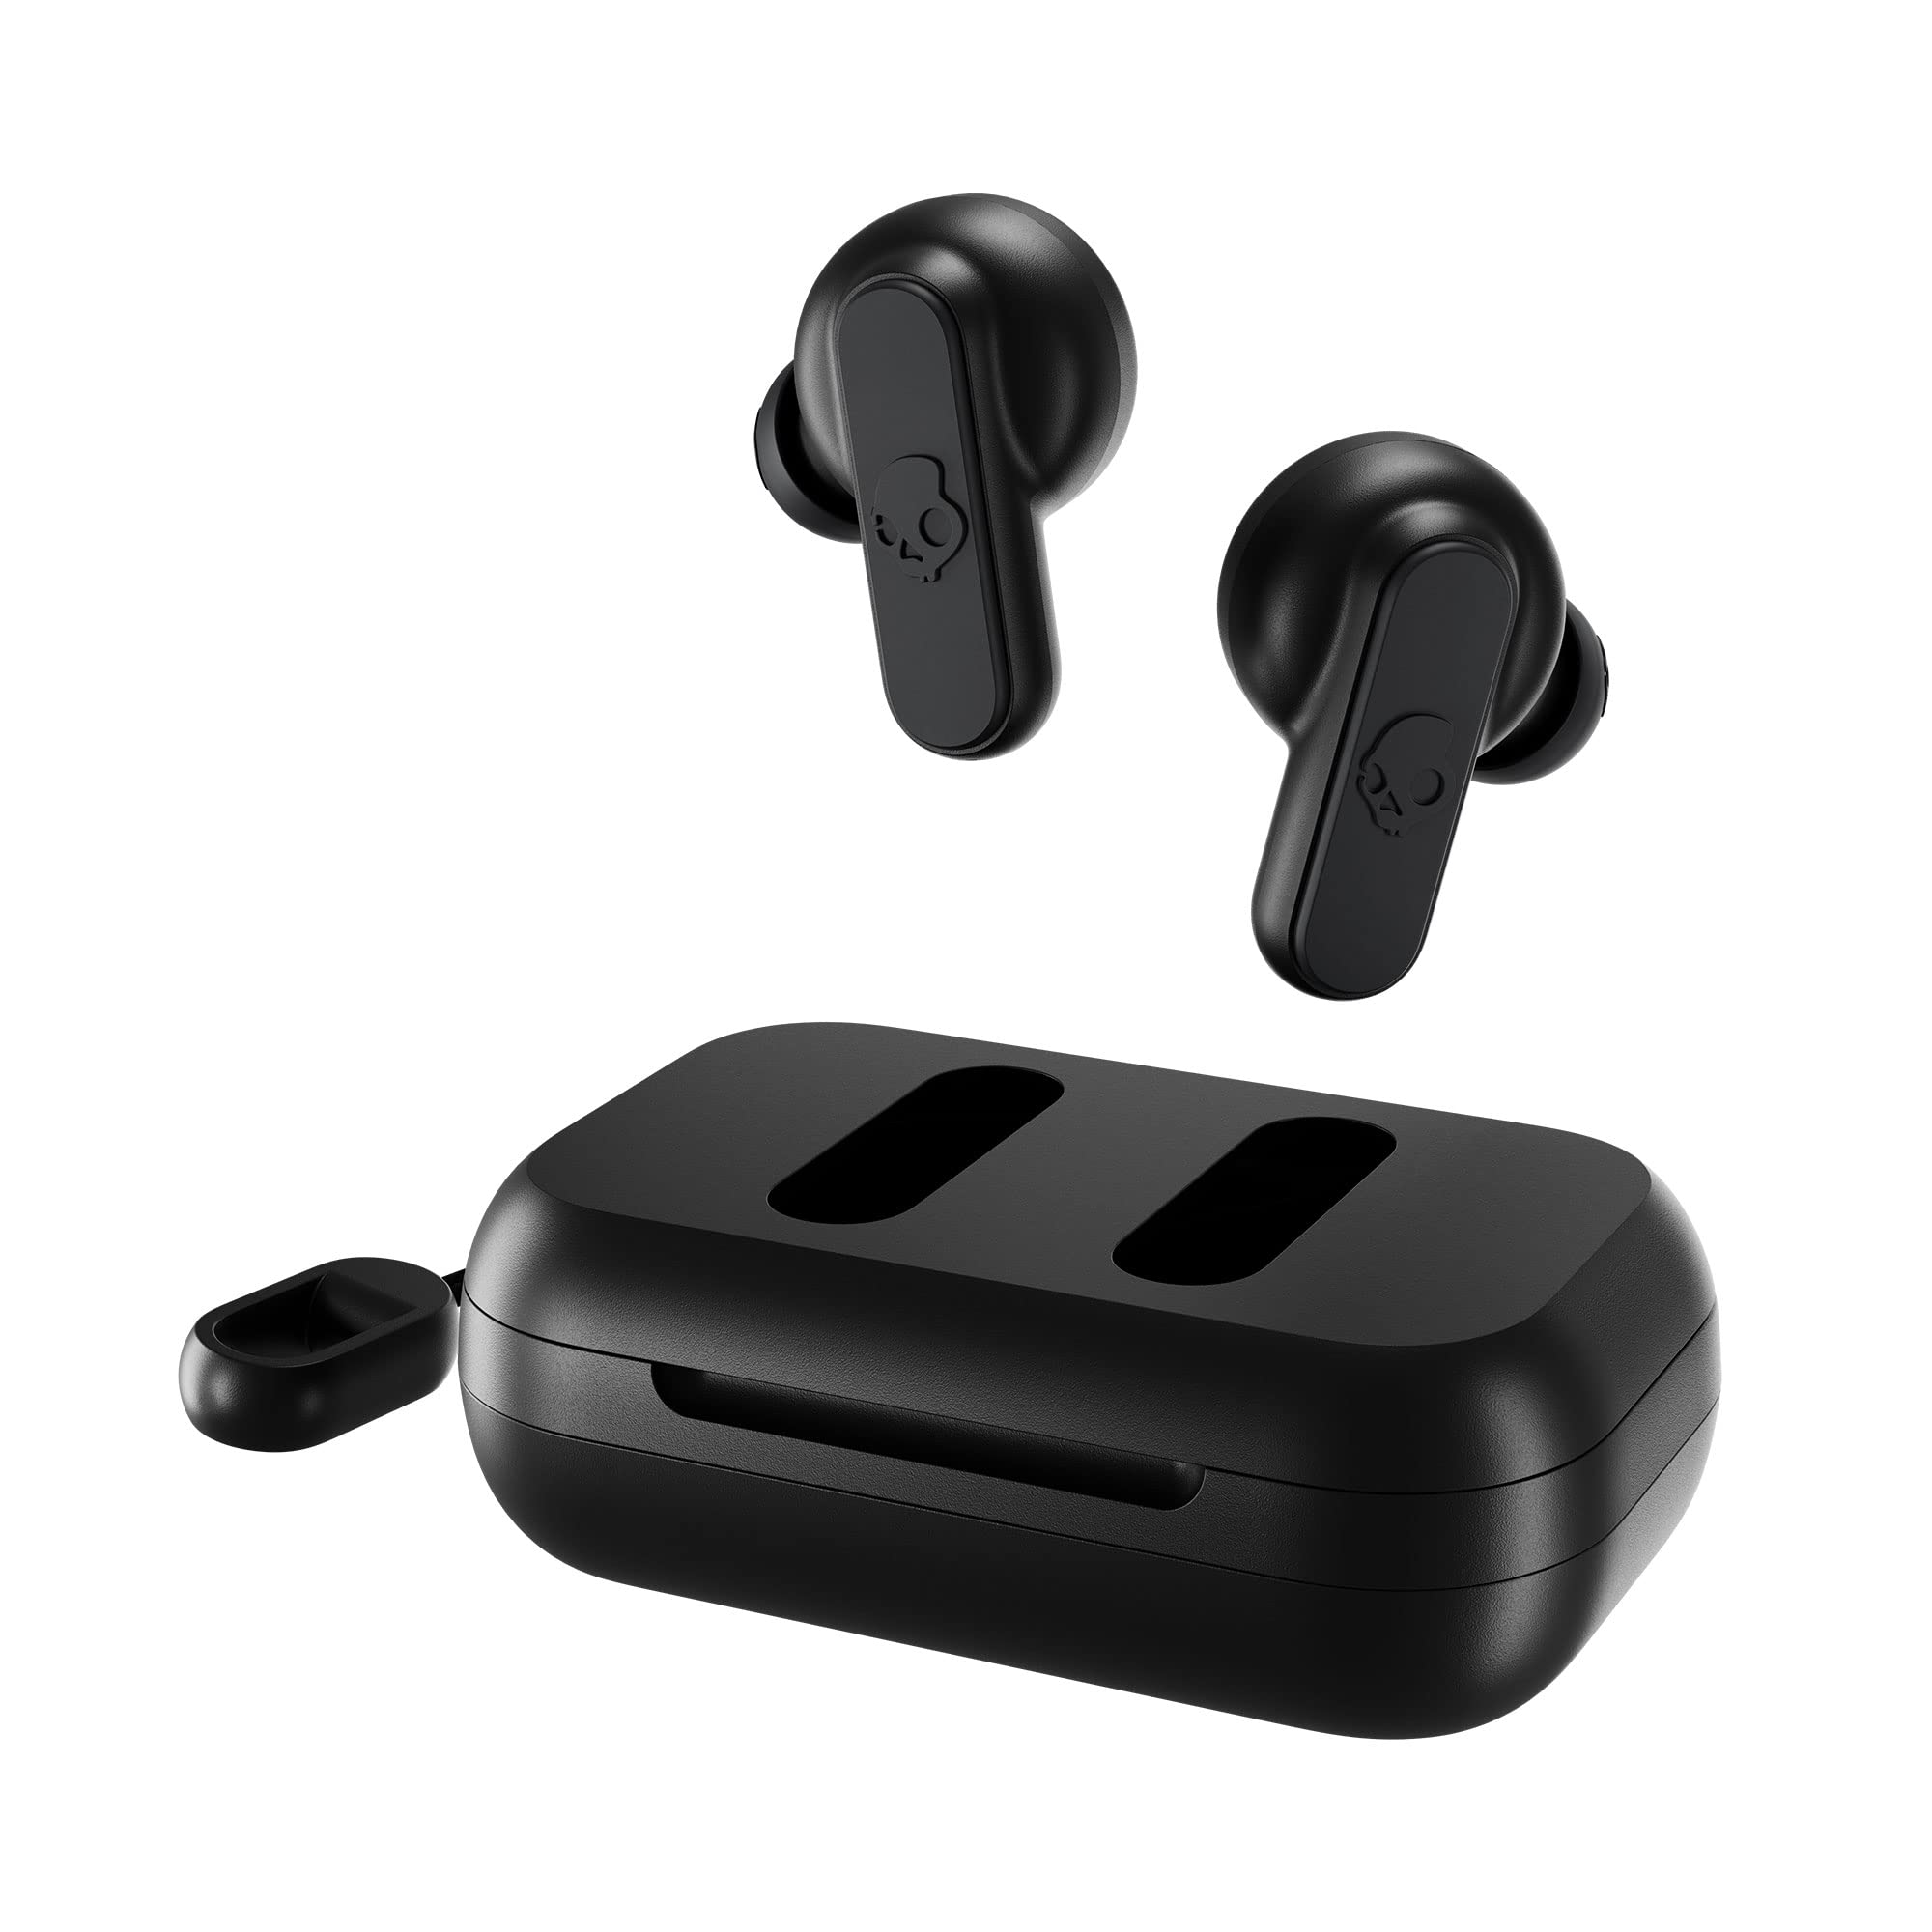 Skullcandy Dime 2 真无线入耳式蓝牙耳机，与 iPhone 和 Android 配合使用。充电盒、瓷砖和麦克风。最适合健身房、运动和游戏，IPX4 防汗防尘 - 黑色